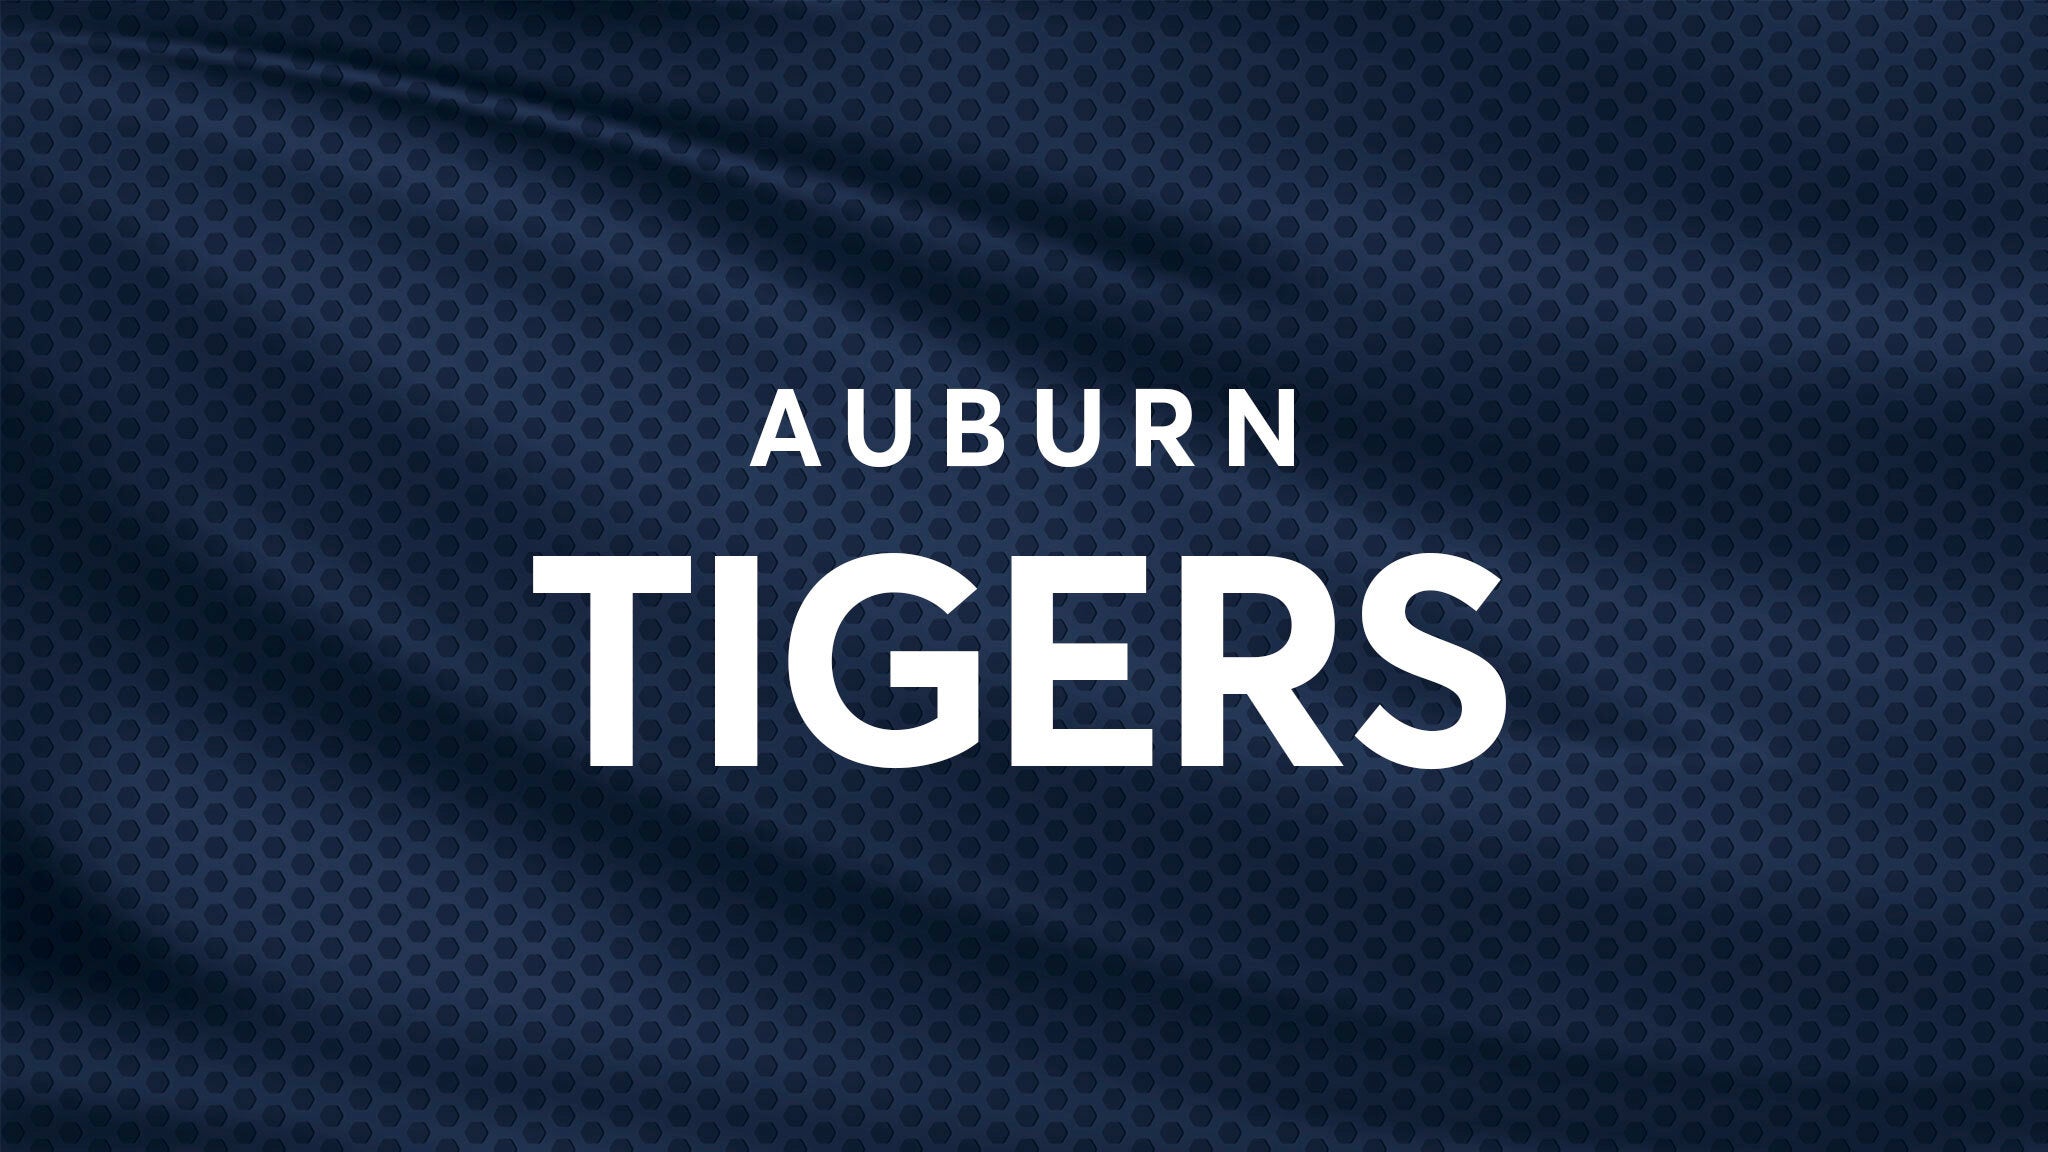 Auburn Tigers Football vs. Alabama A&M Bulldogs Football hero